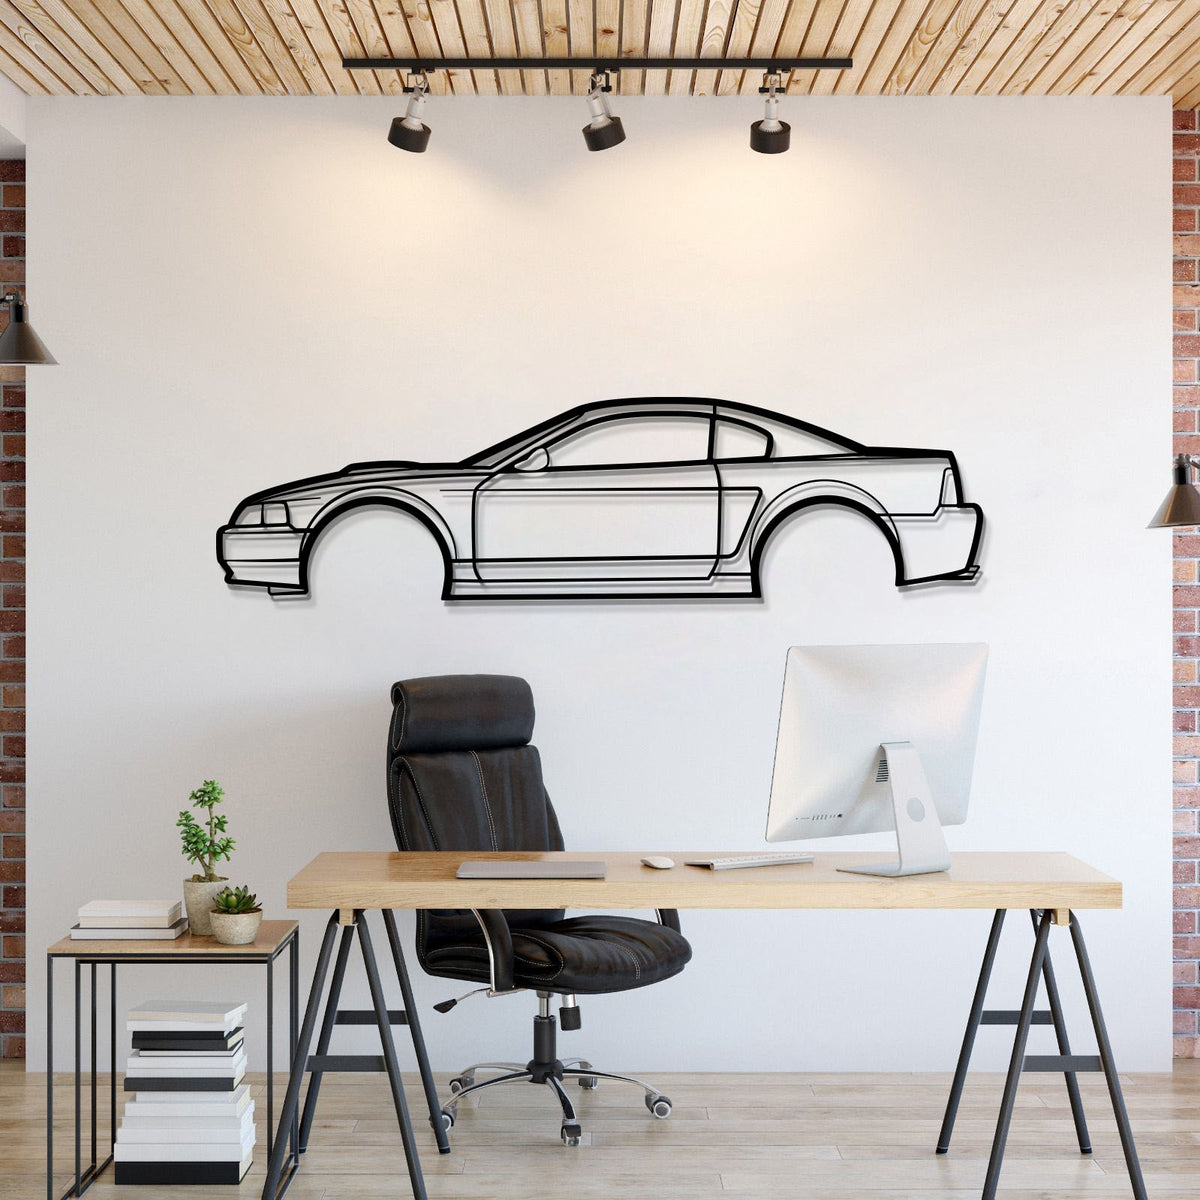 2001 Mustang GT Metal Car Wall Art - MT0290